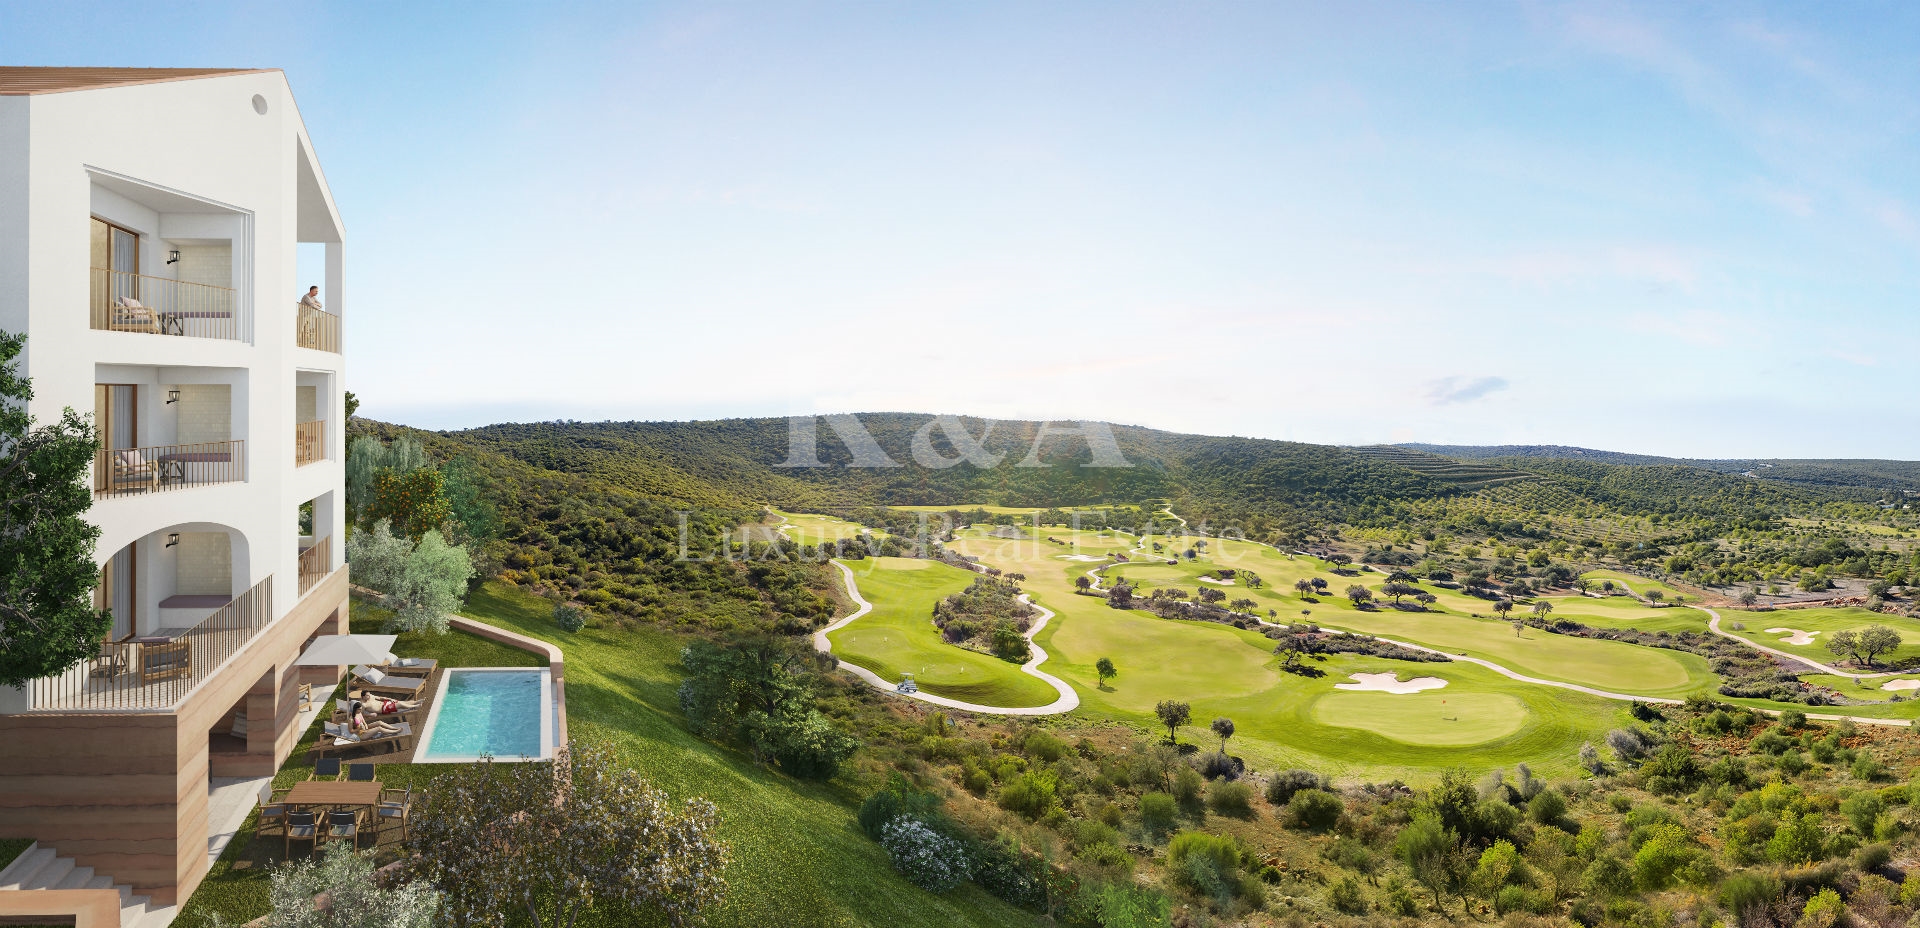 2 Bedroom apartment in a luxury golf resort, Algarve